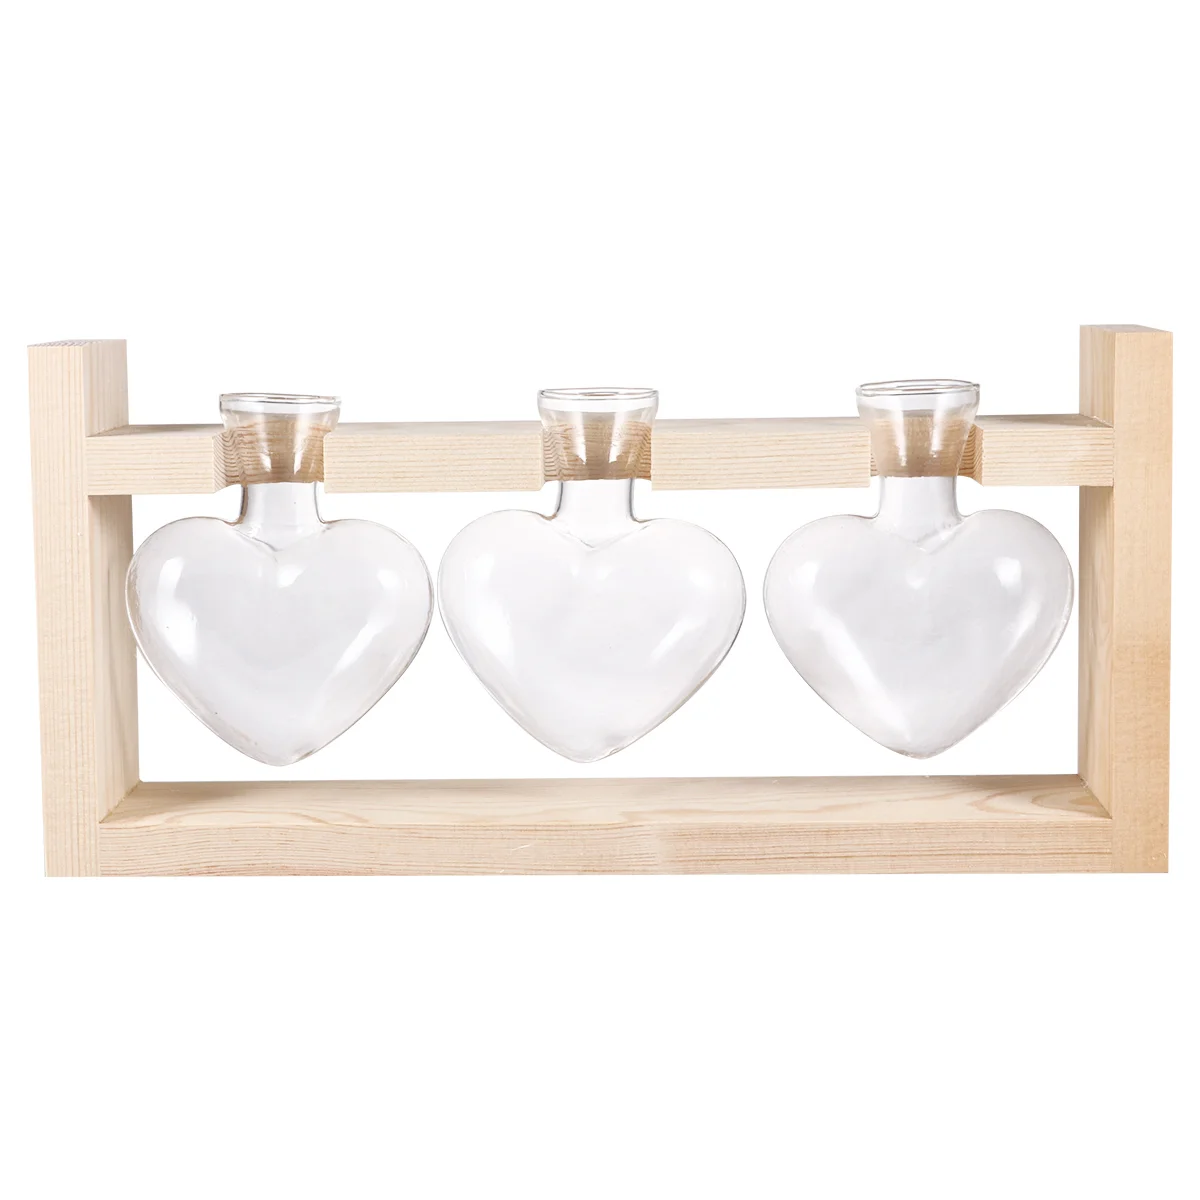 

Heart Shape Glass Vase Hydroponic Vases Terrarium Planter with Wooden Stand for Indoor Home Office Wedding Desktop Nordic decor